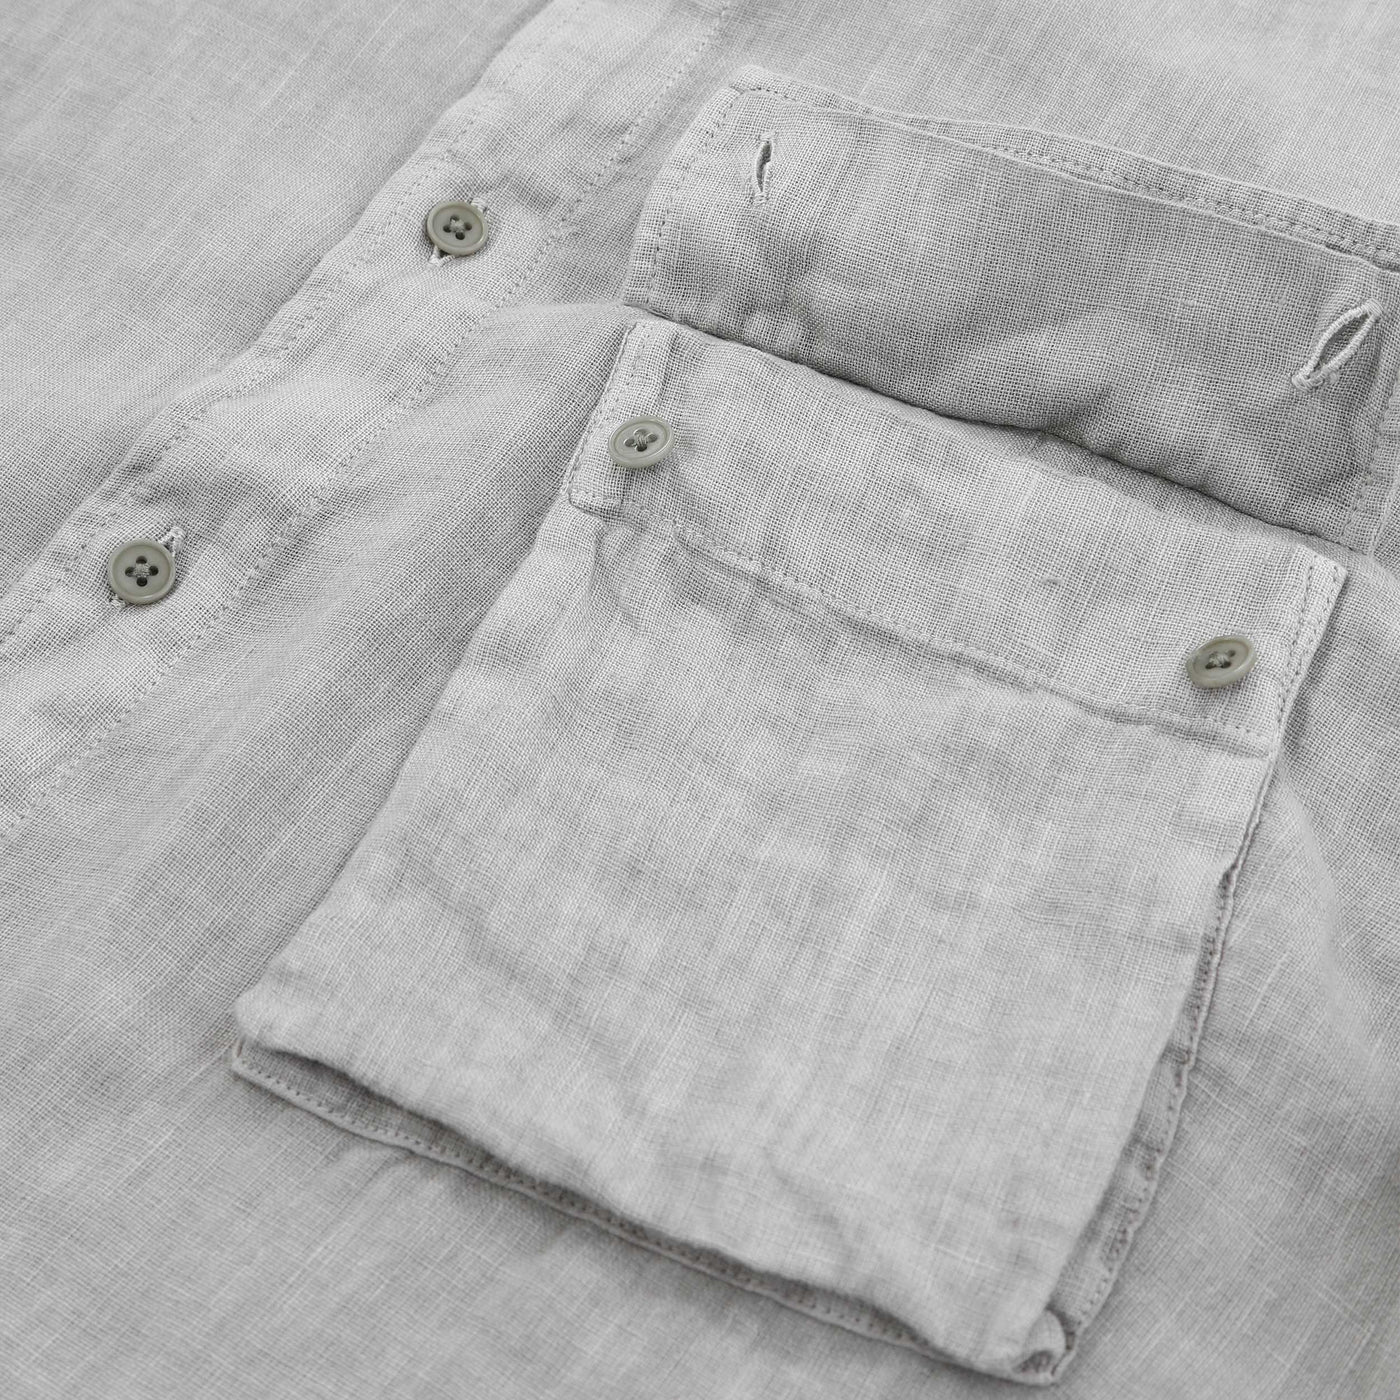 Belstaff Scale Linen Shirt in Cloud Grey Pocket